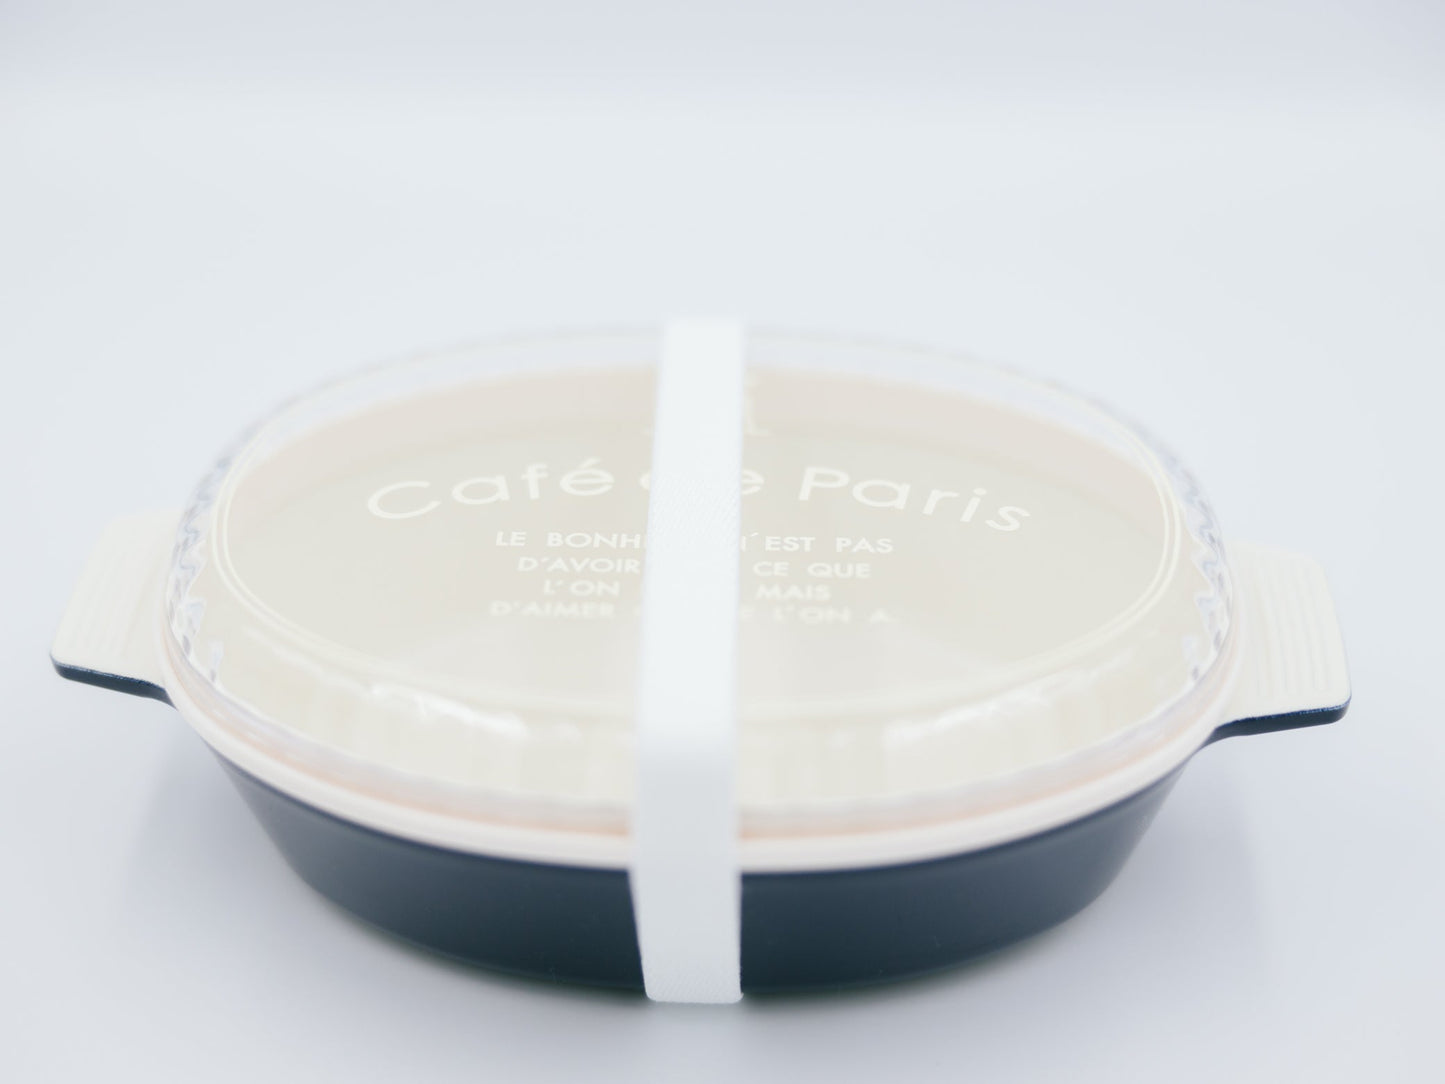 Café de Paris ランチボックス | ネイビー